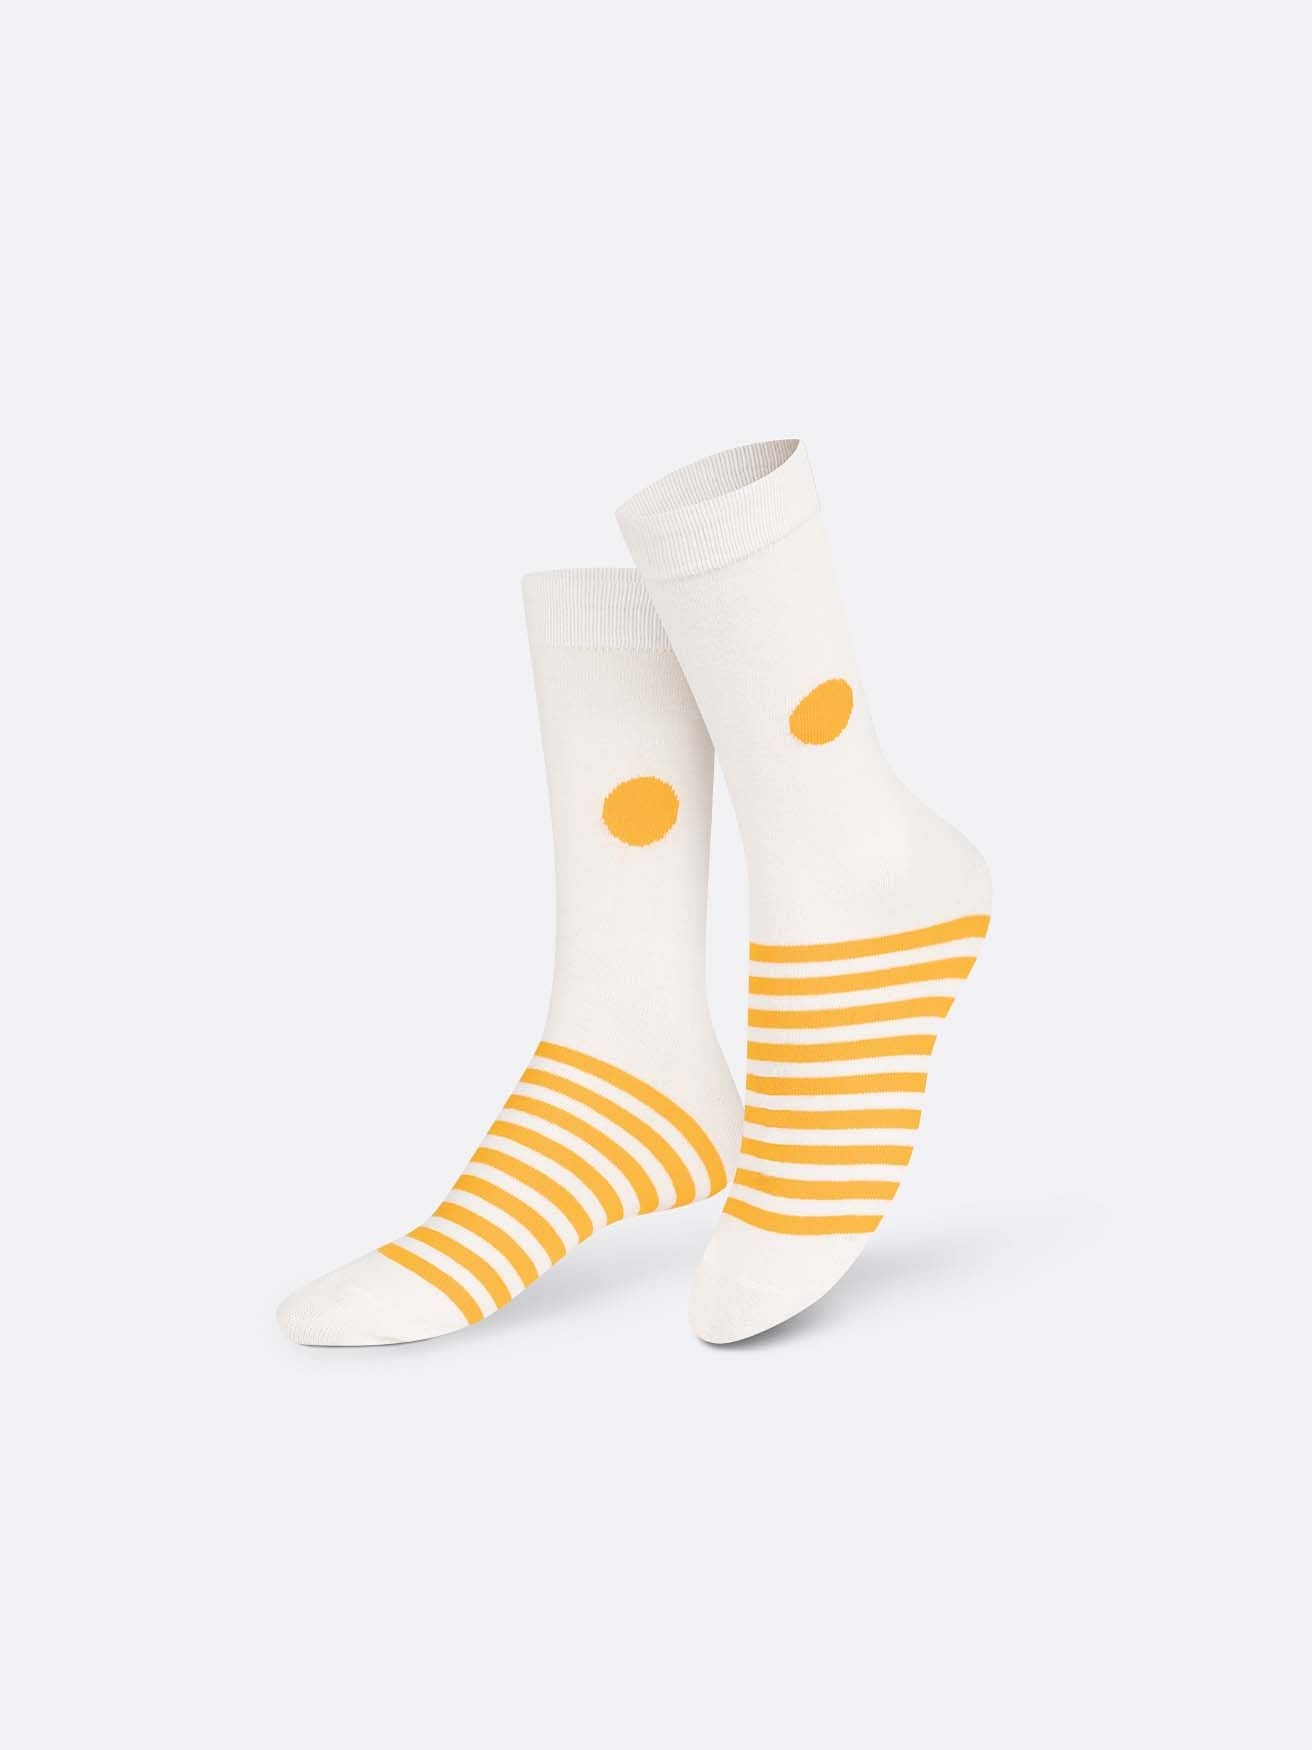 Miso Ramen Socks